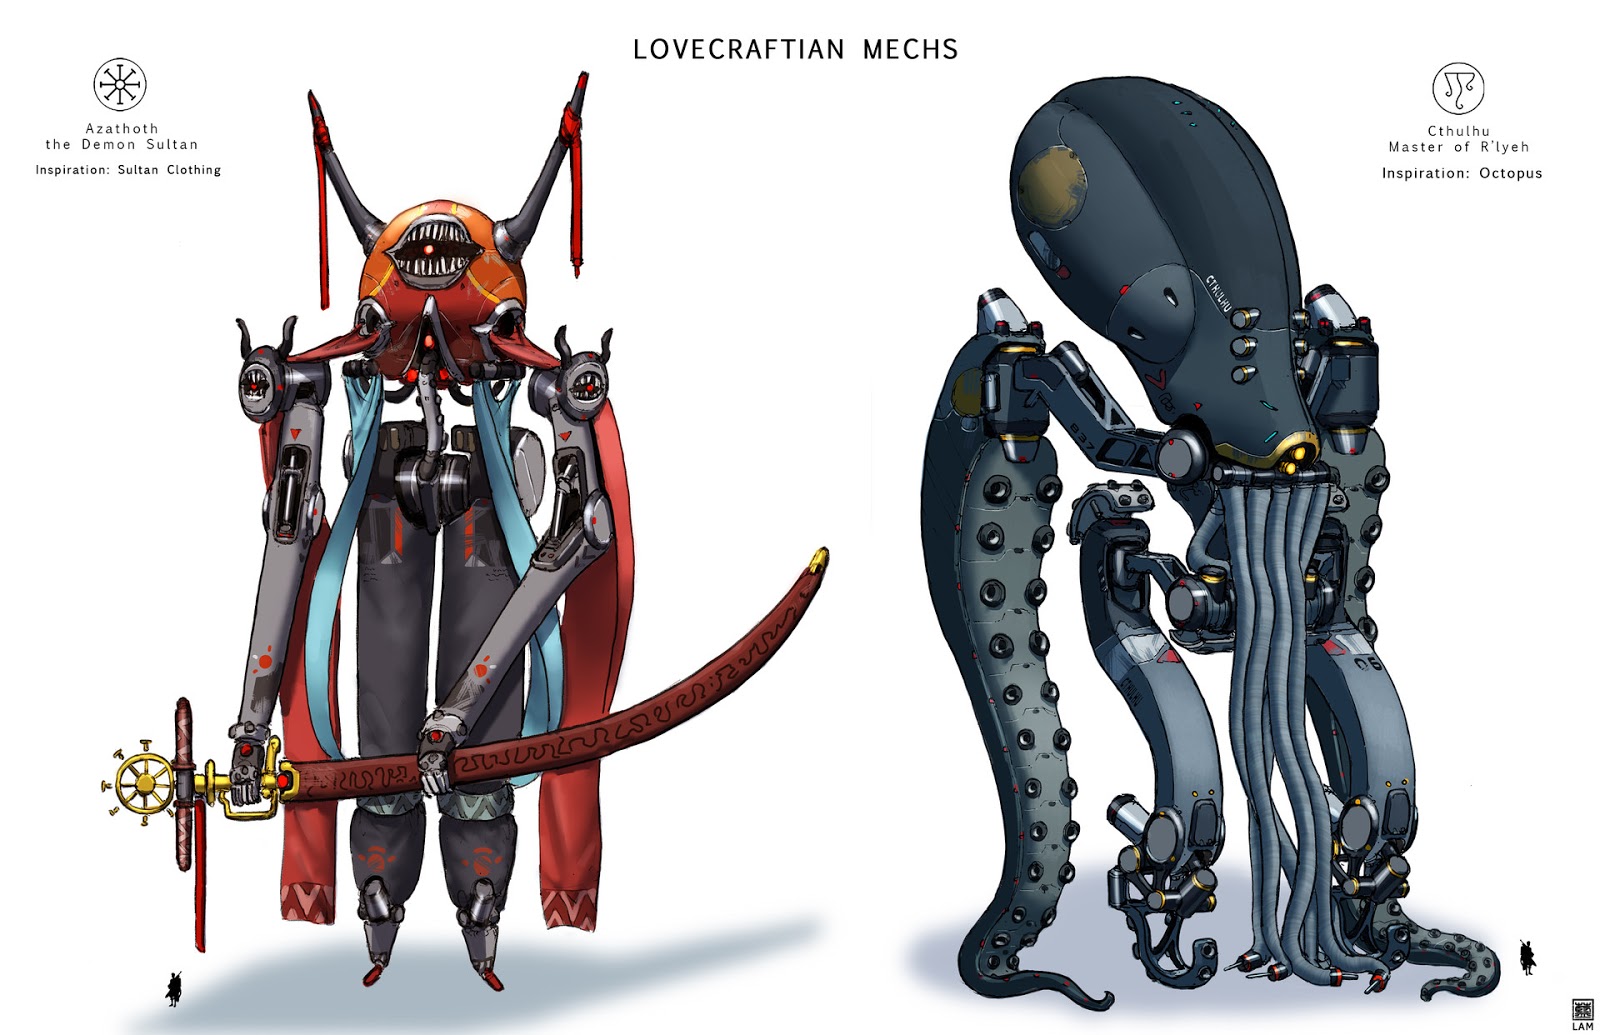 Aliens Inteligentes No-Humanoides 3: Los Arácnidos de Starship